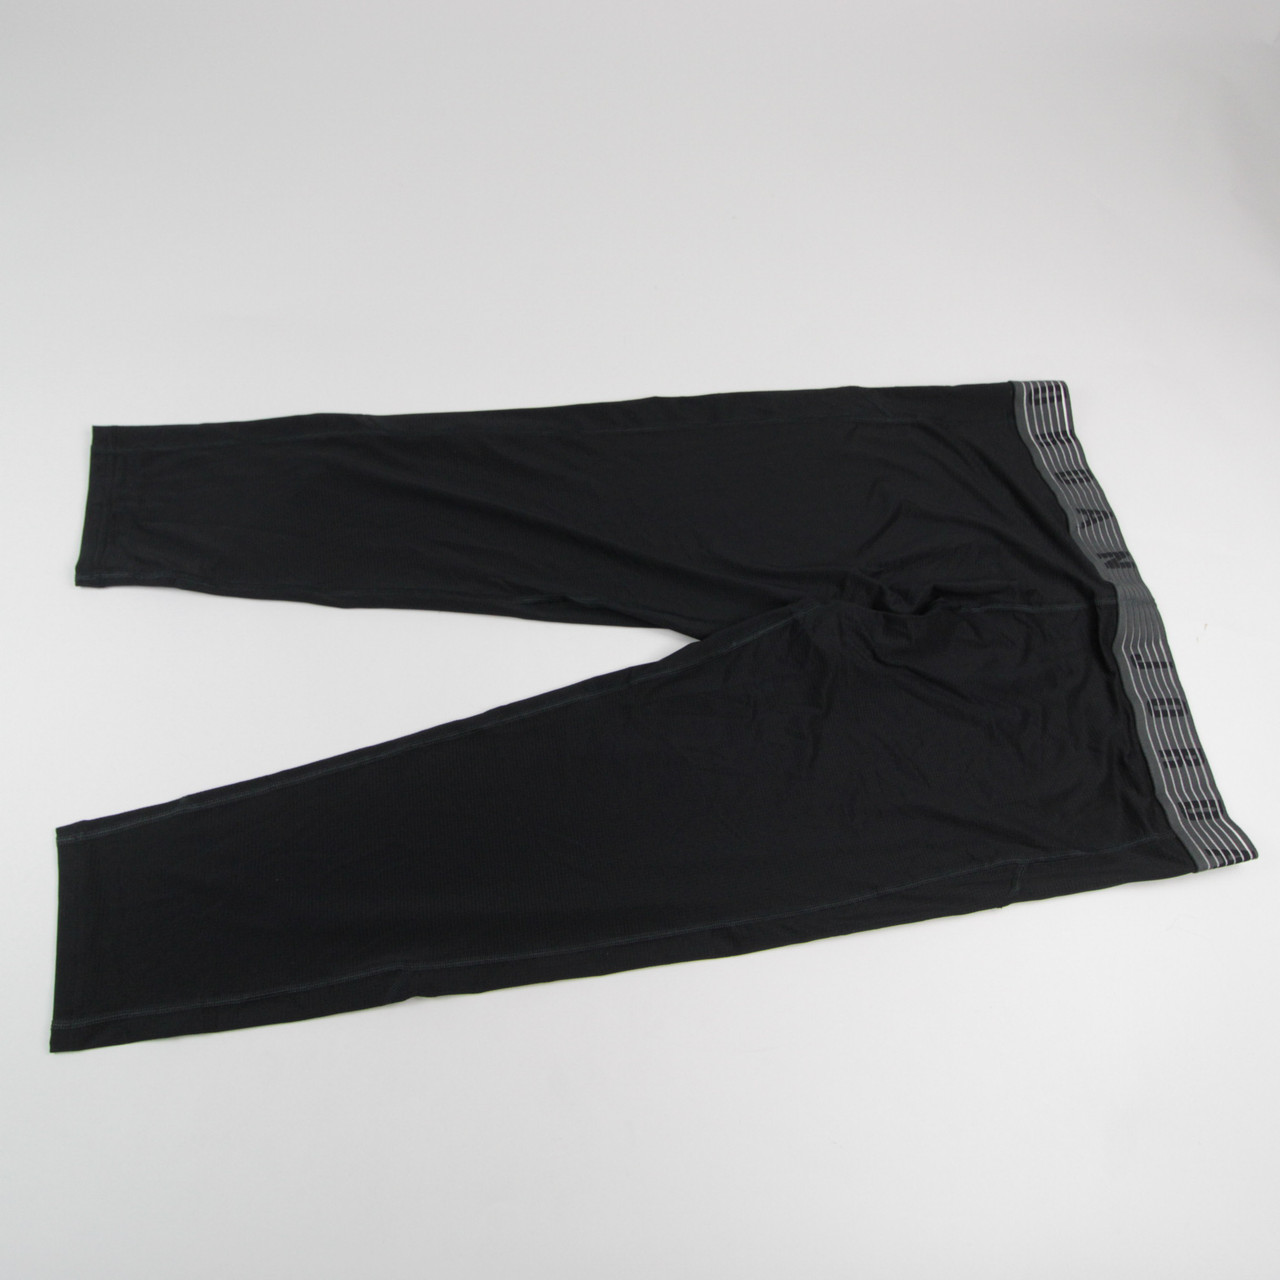 Air Jordan Compression Pants Men's Black New without Tags 3XL 456